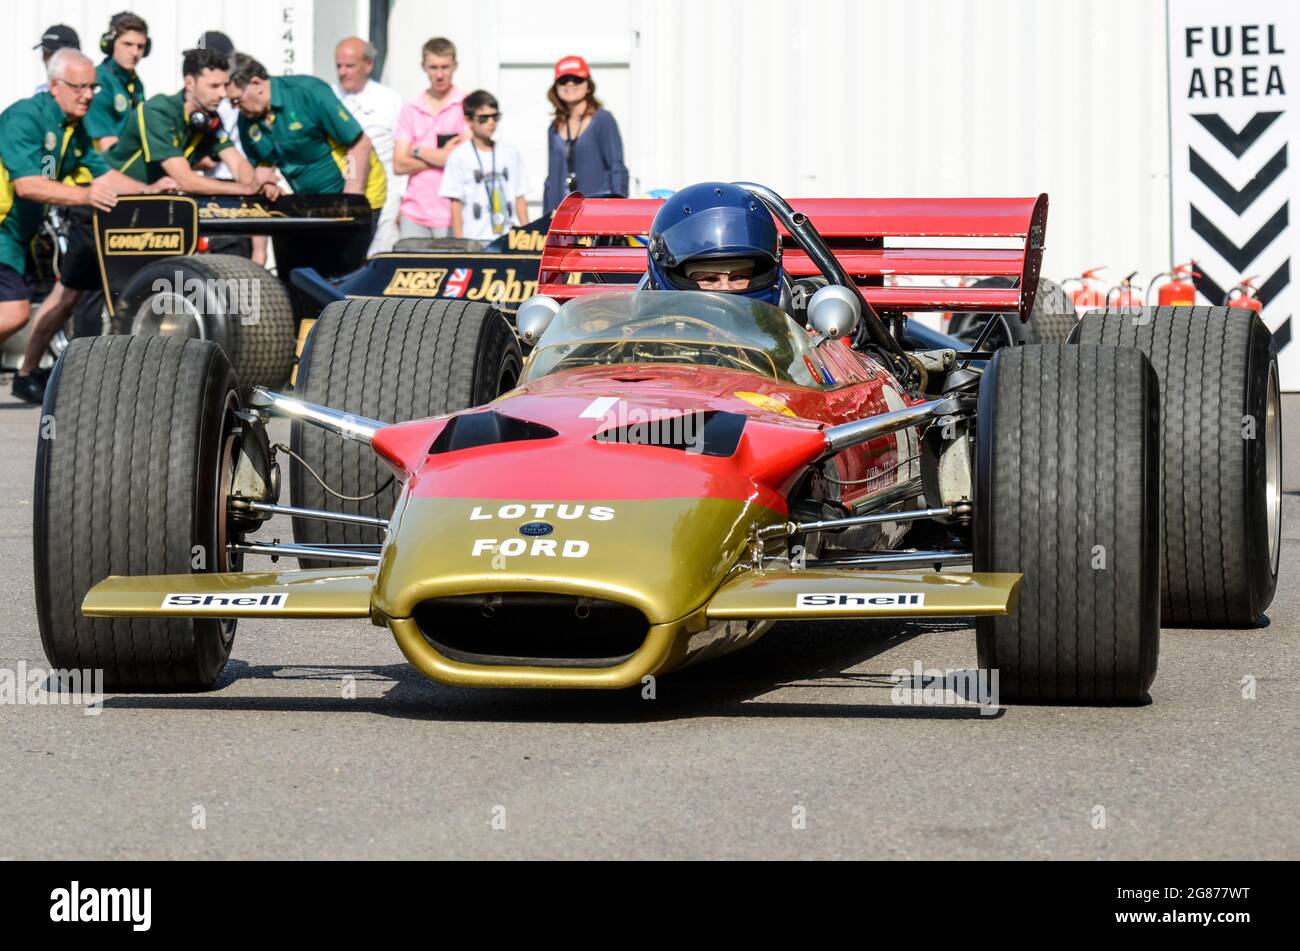 1968 Lotus 49 Grand Prix, Formel-1-Rennwagen beim Goodwood Festival of Speed 2013. Gold Leaf Sponsoring Farben rot und Gold. Formel-1-Jahrgang der 60er Jahre Stockfoto